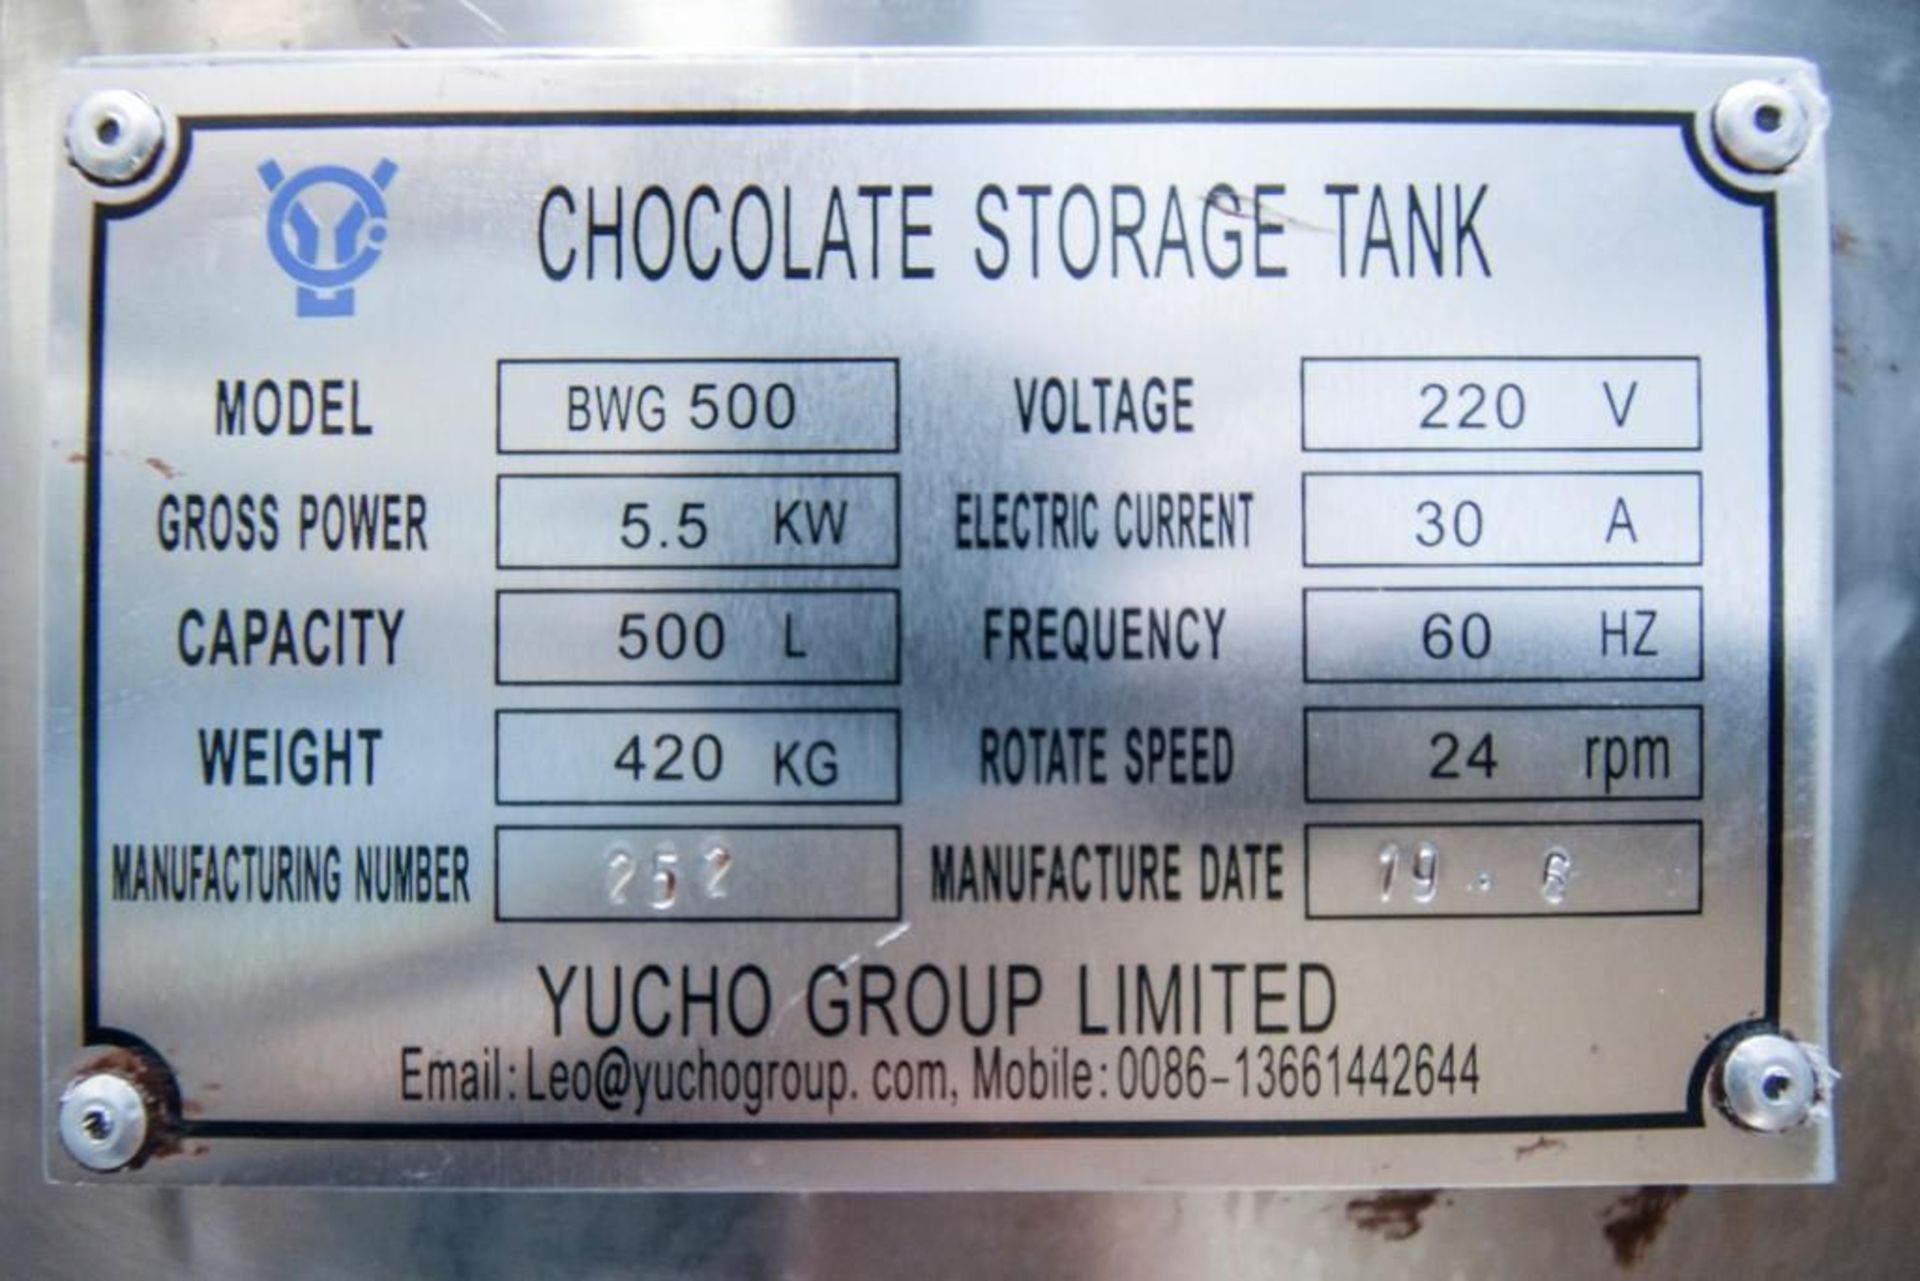 Yucho Group Limited Chocolate Storage Tank BWG 500 - Image 3 of 4